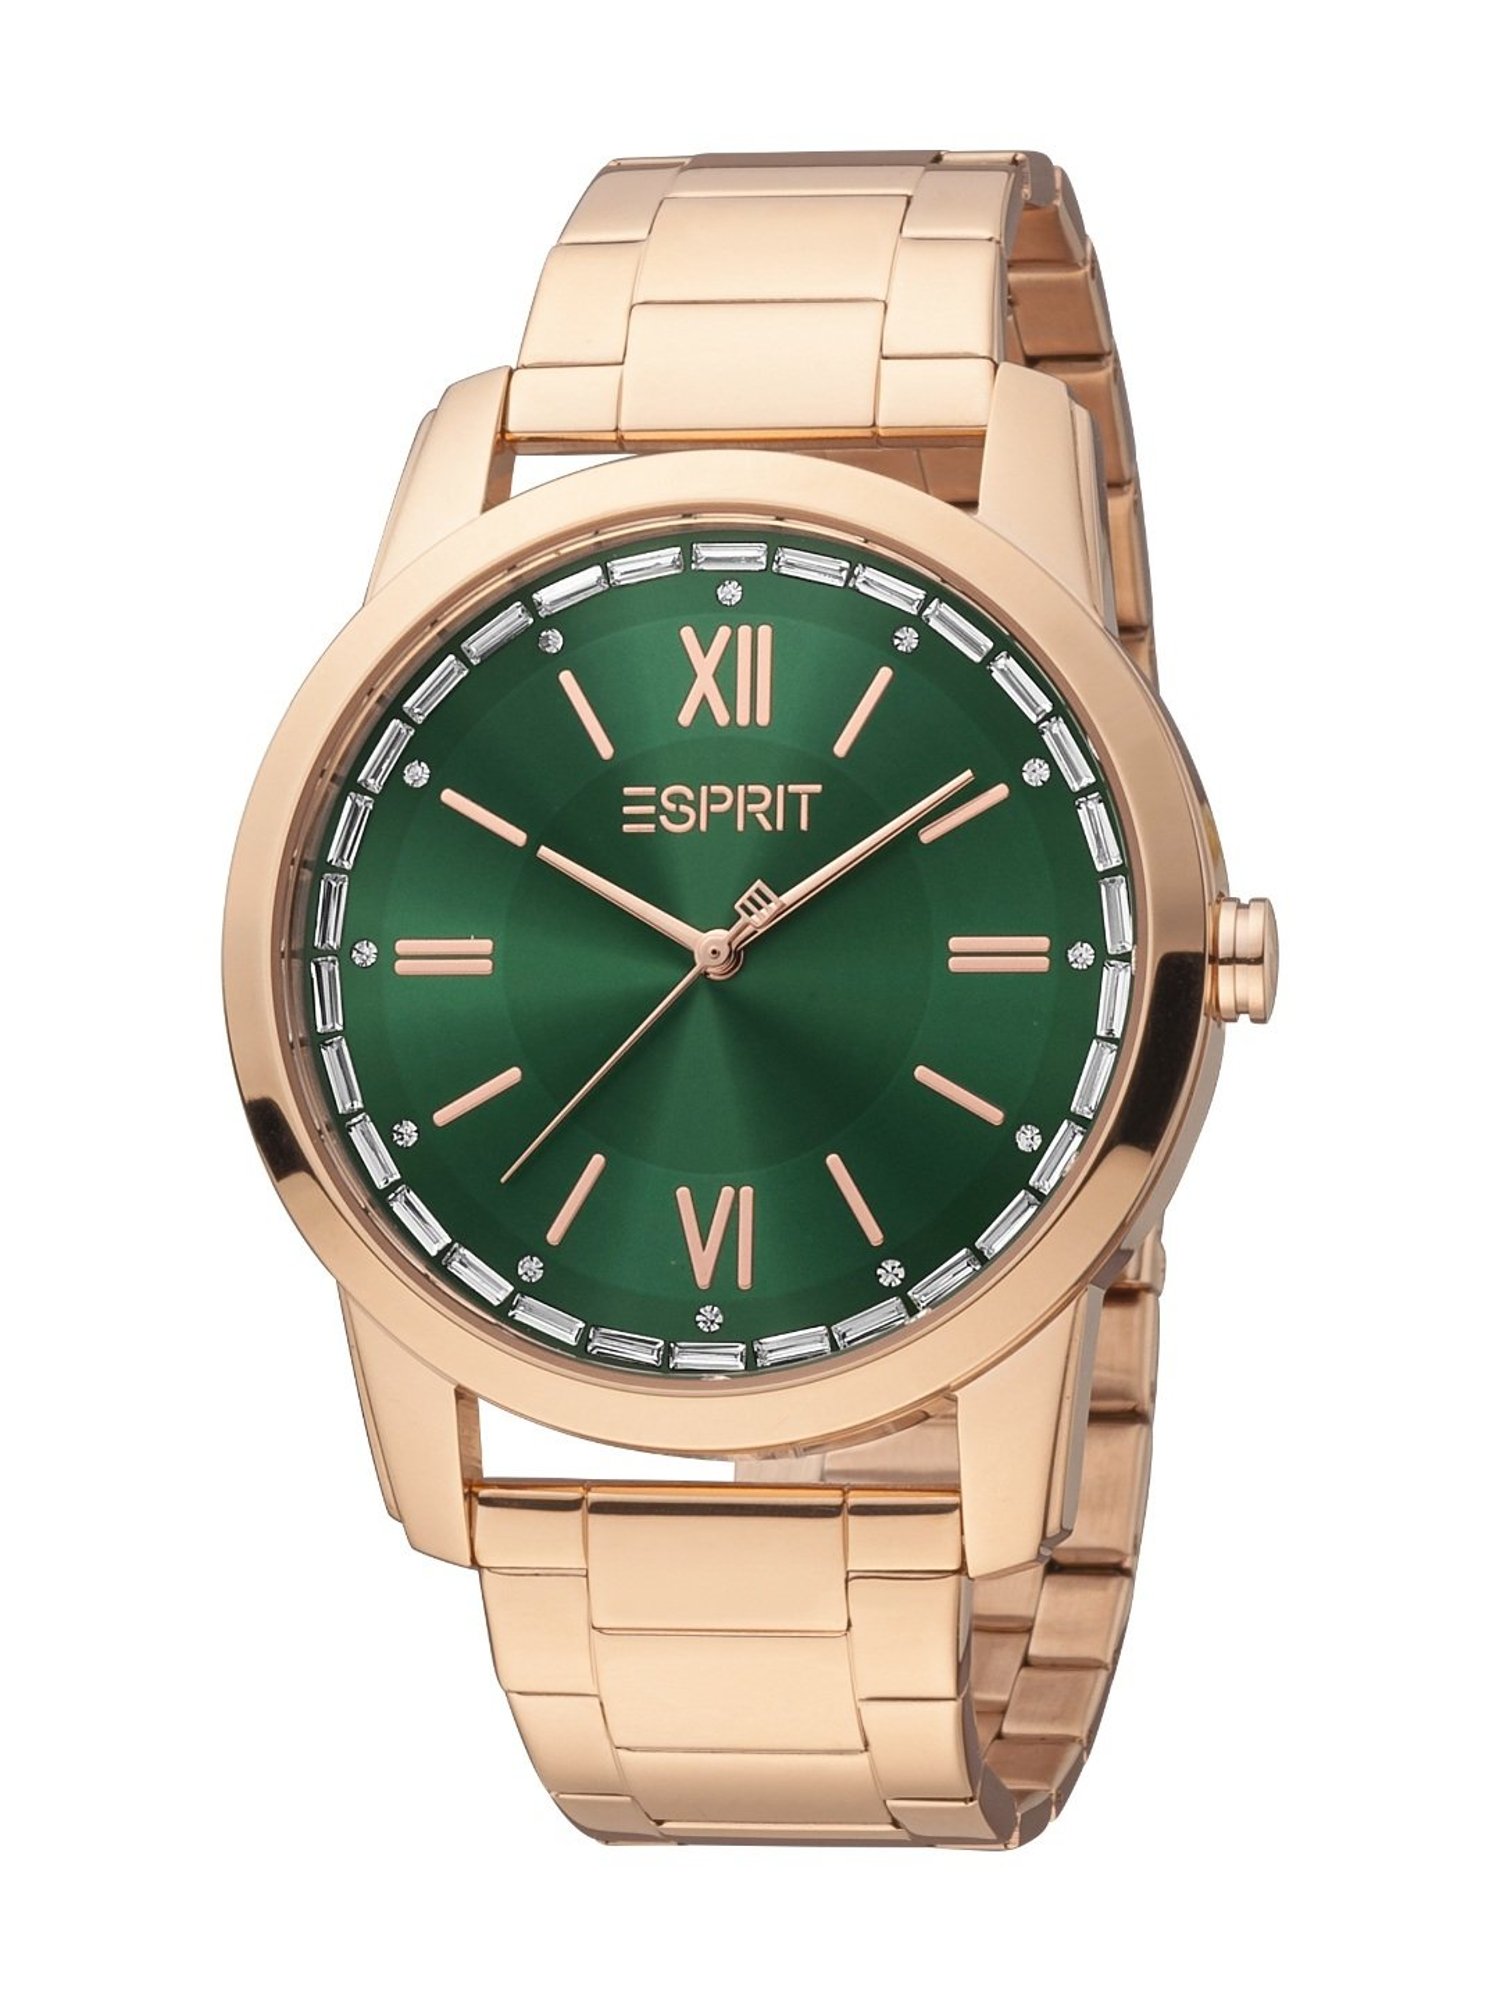 Esprit Watch ES1G339L0035 - TimeOutlet.shop